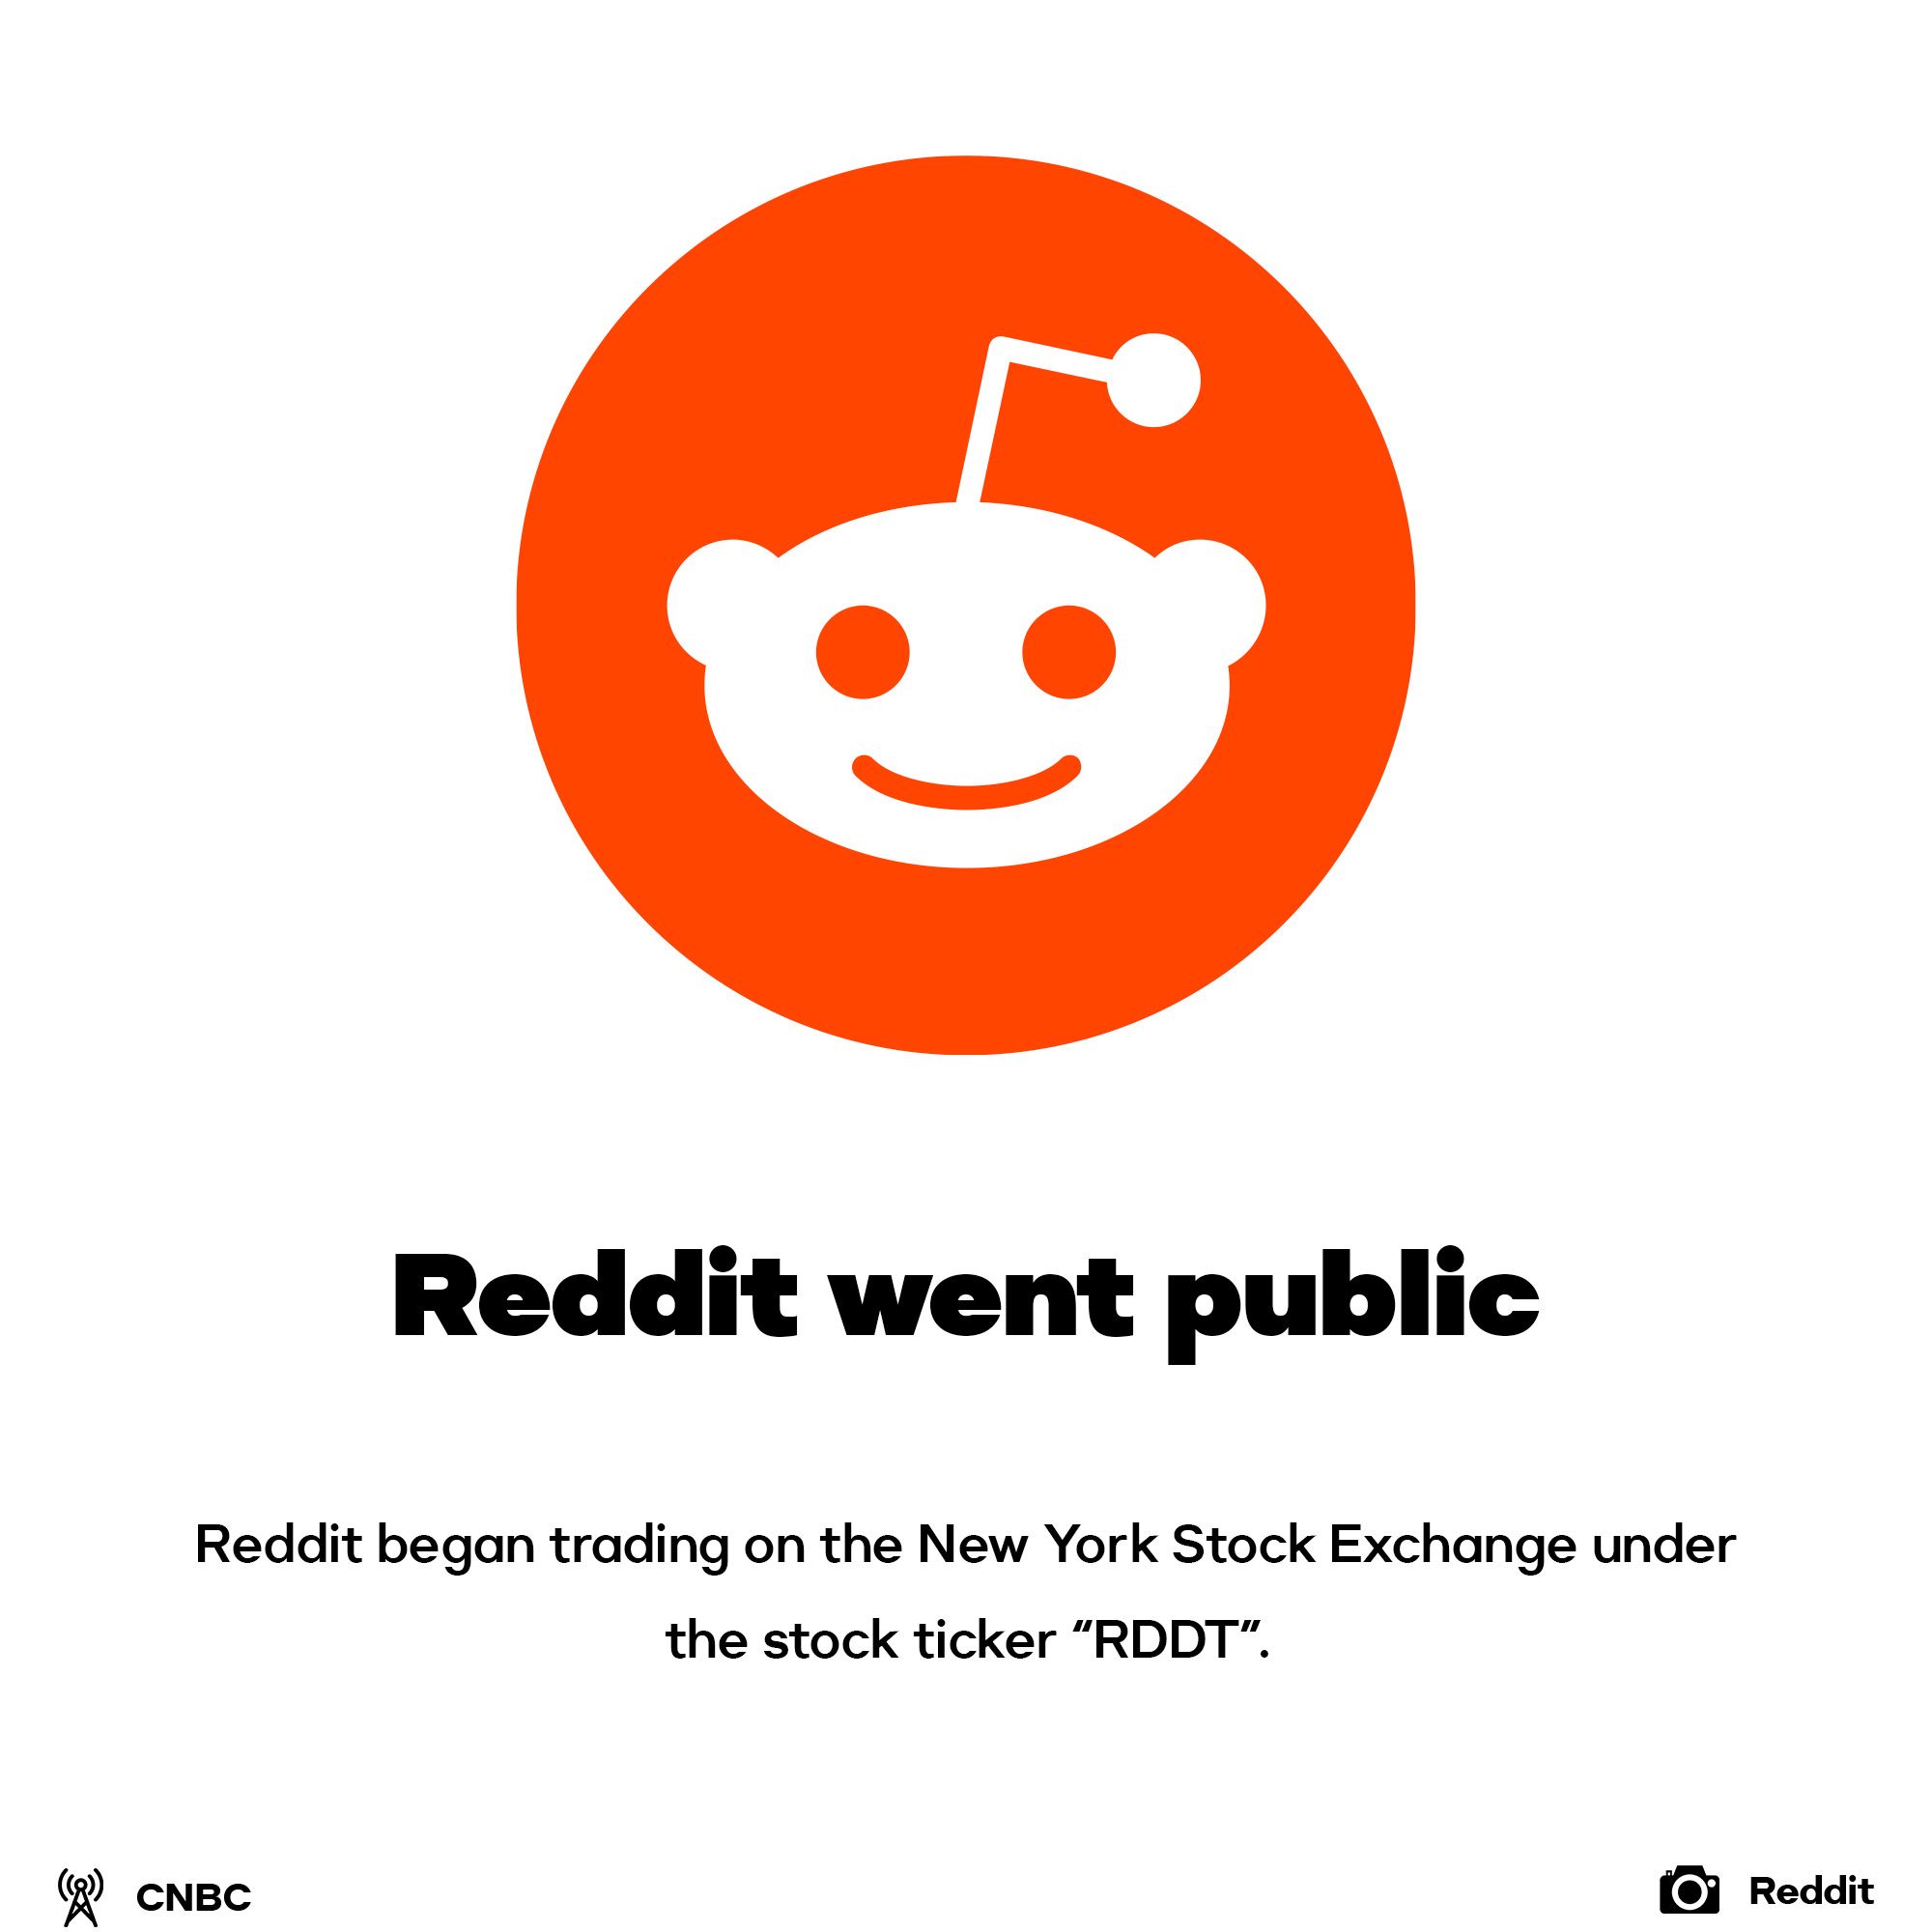 Reddit's IPO